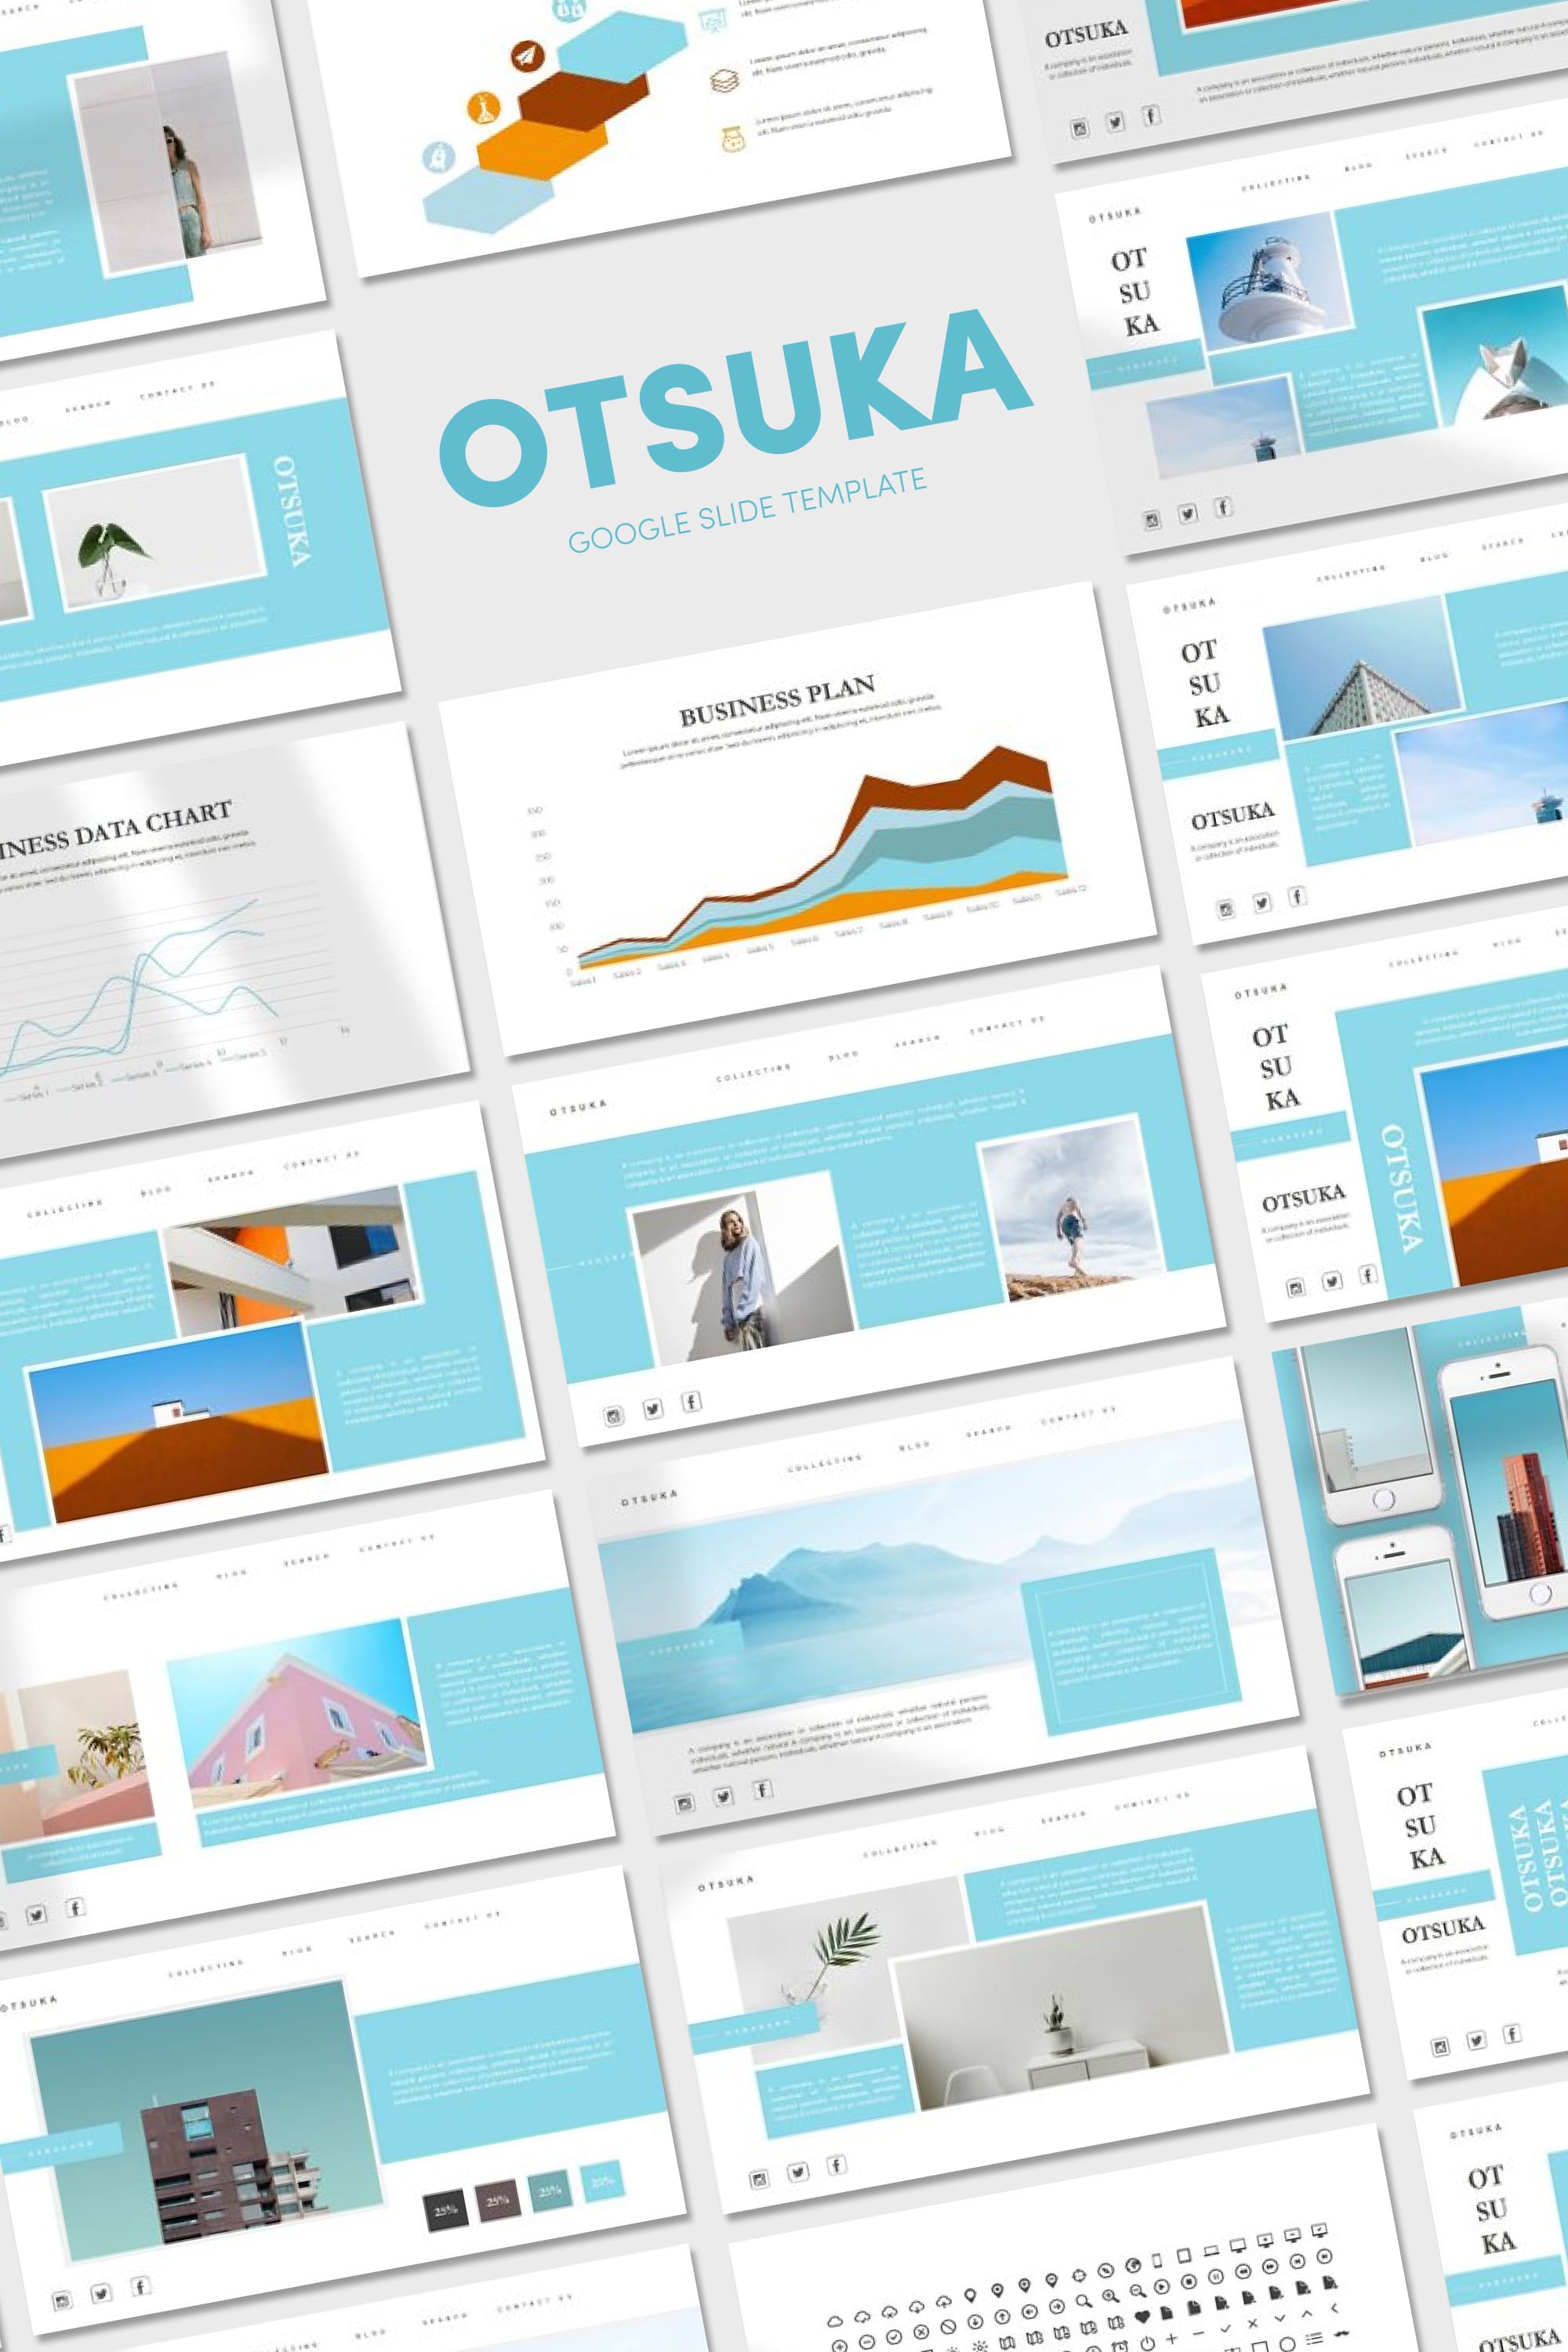 Otsuka google slide template - pinterest image preview.